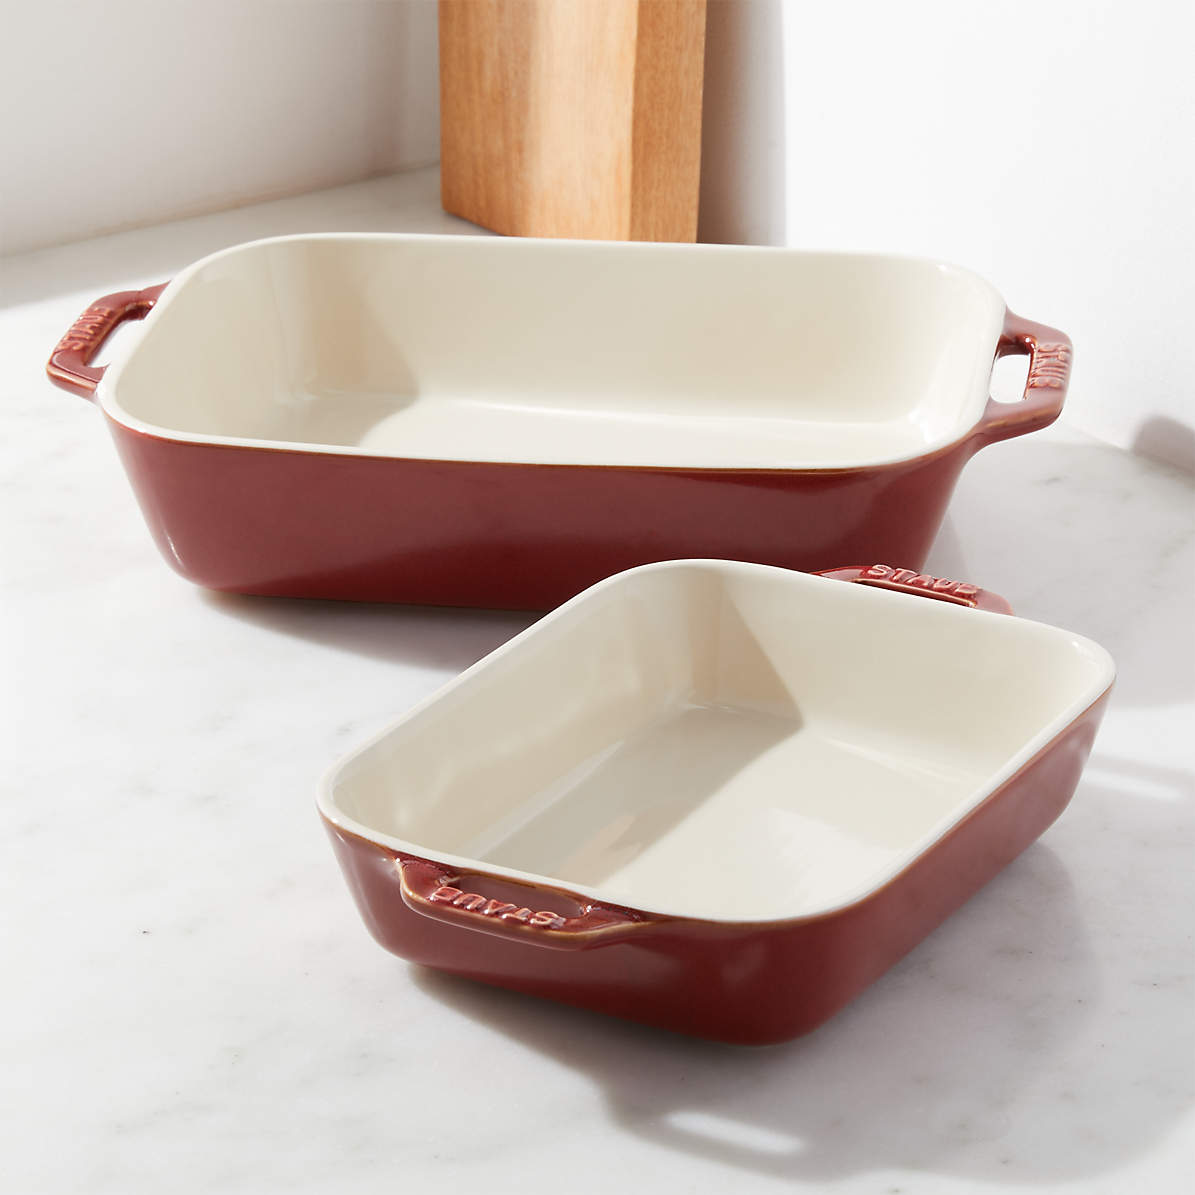 Rustic Red Staub 40511-923 Ceramics Rectangular Baking Dish Set 2-Piece 